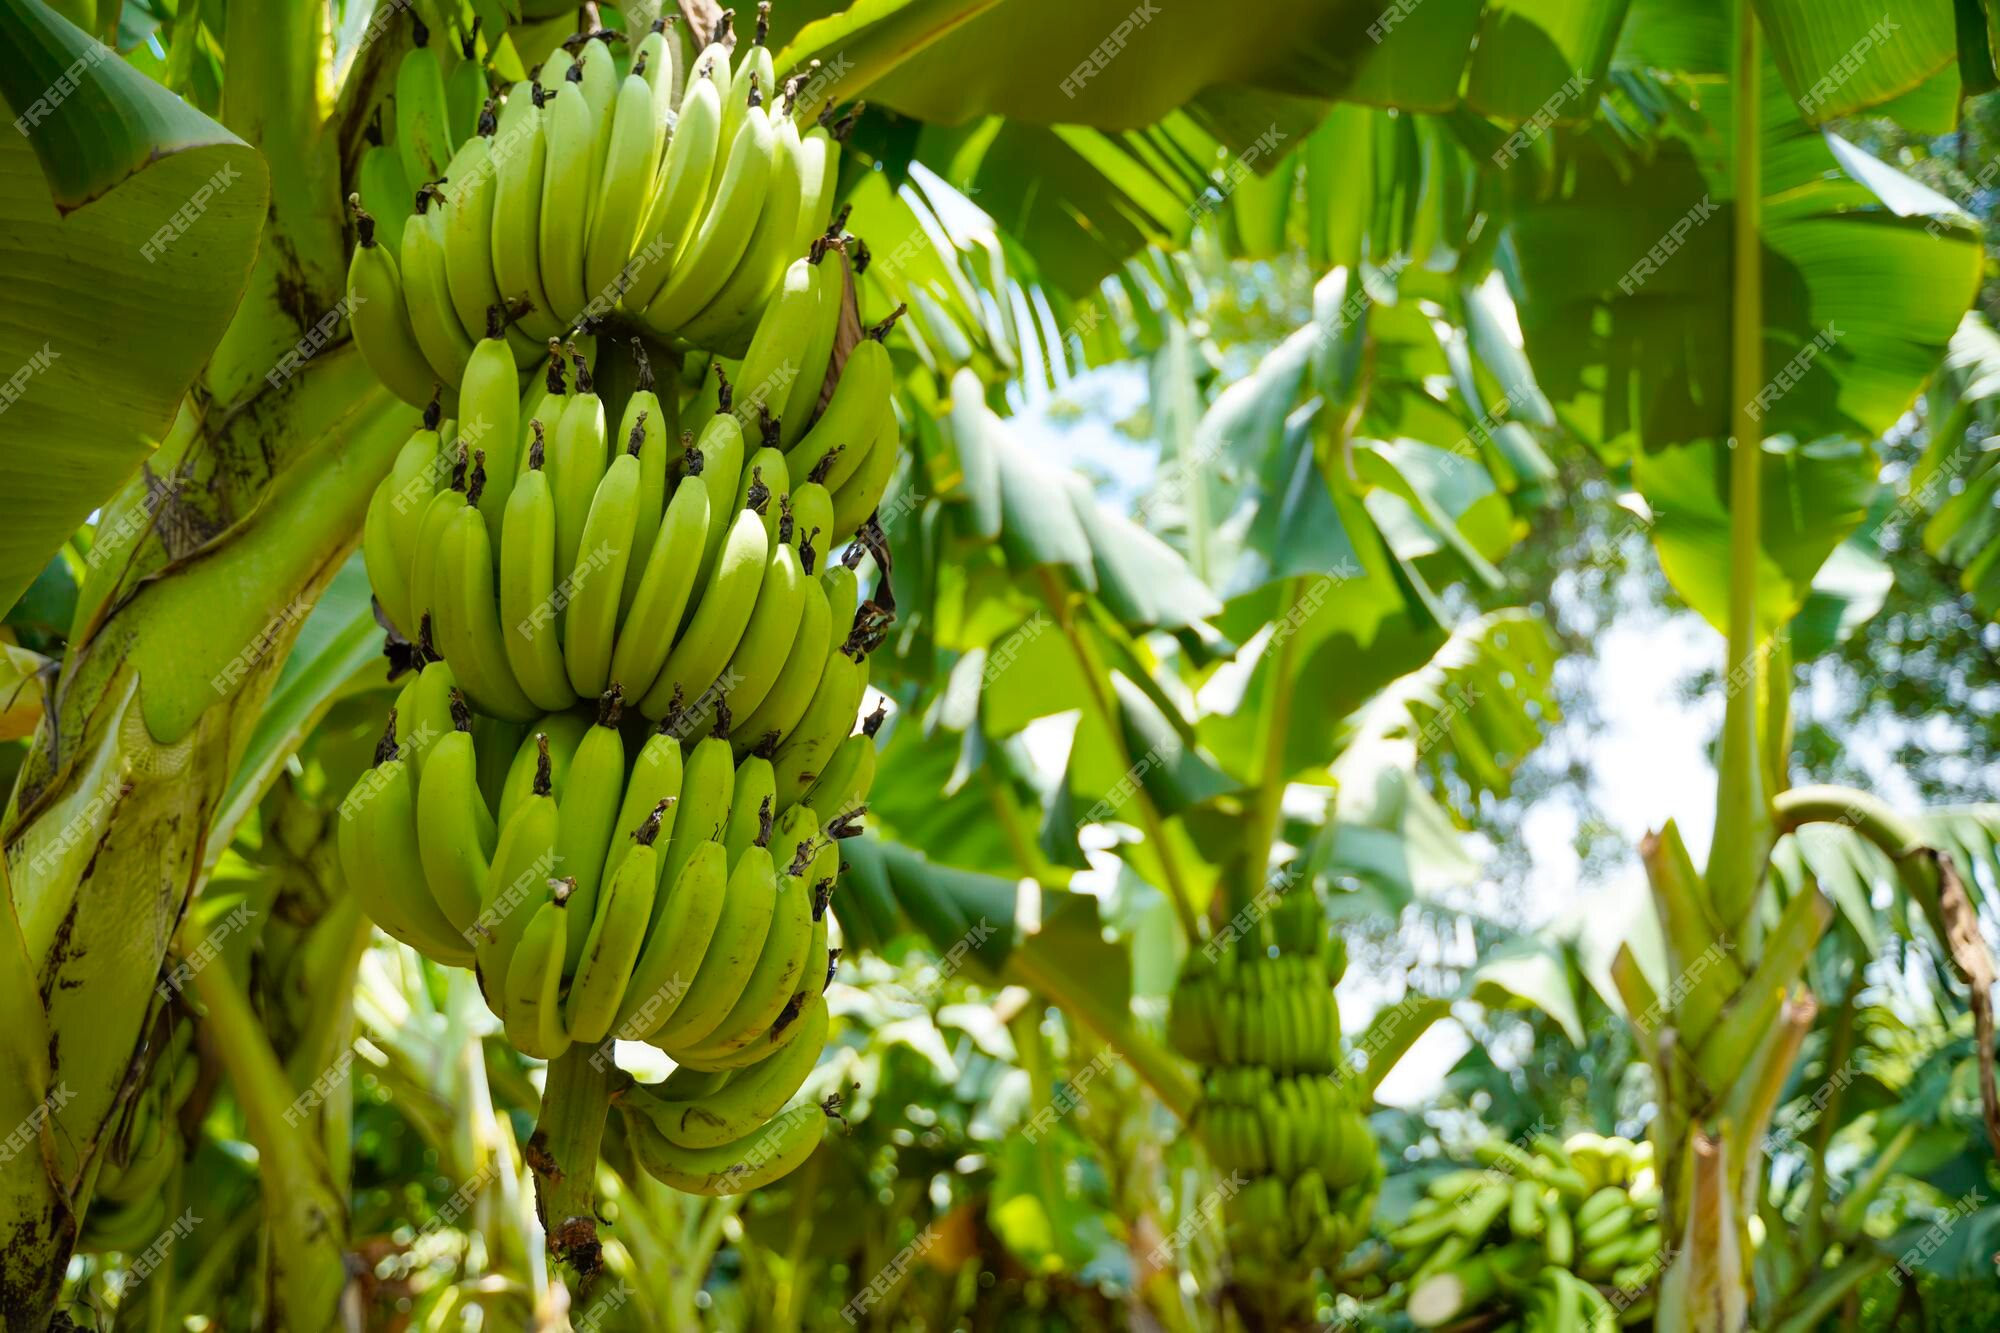 https://img.freepik.com/premium-photo/green-banana-bunch-agriculture-field_75648-8836.jpg?w=2000